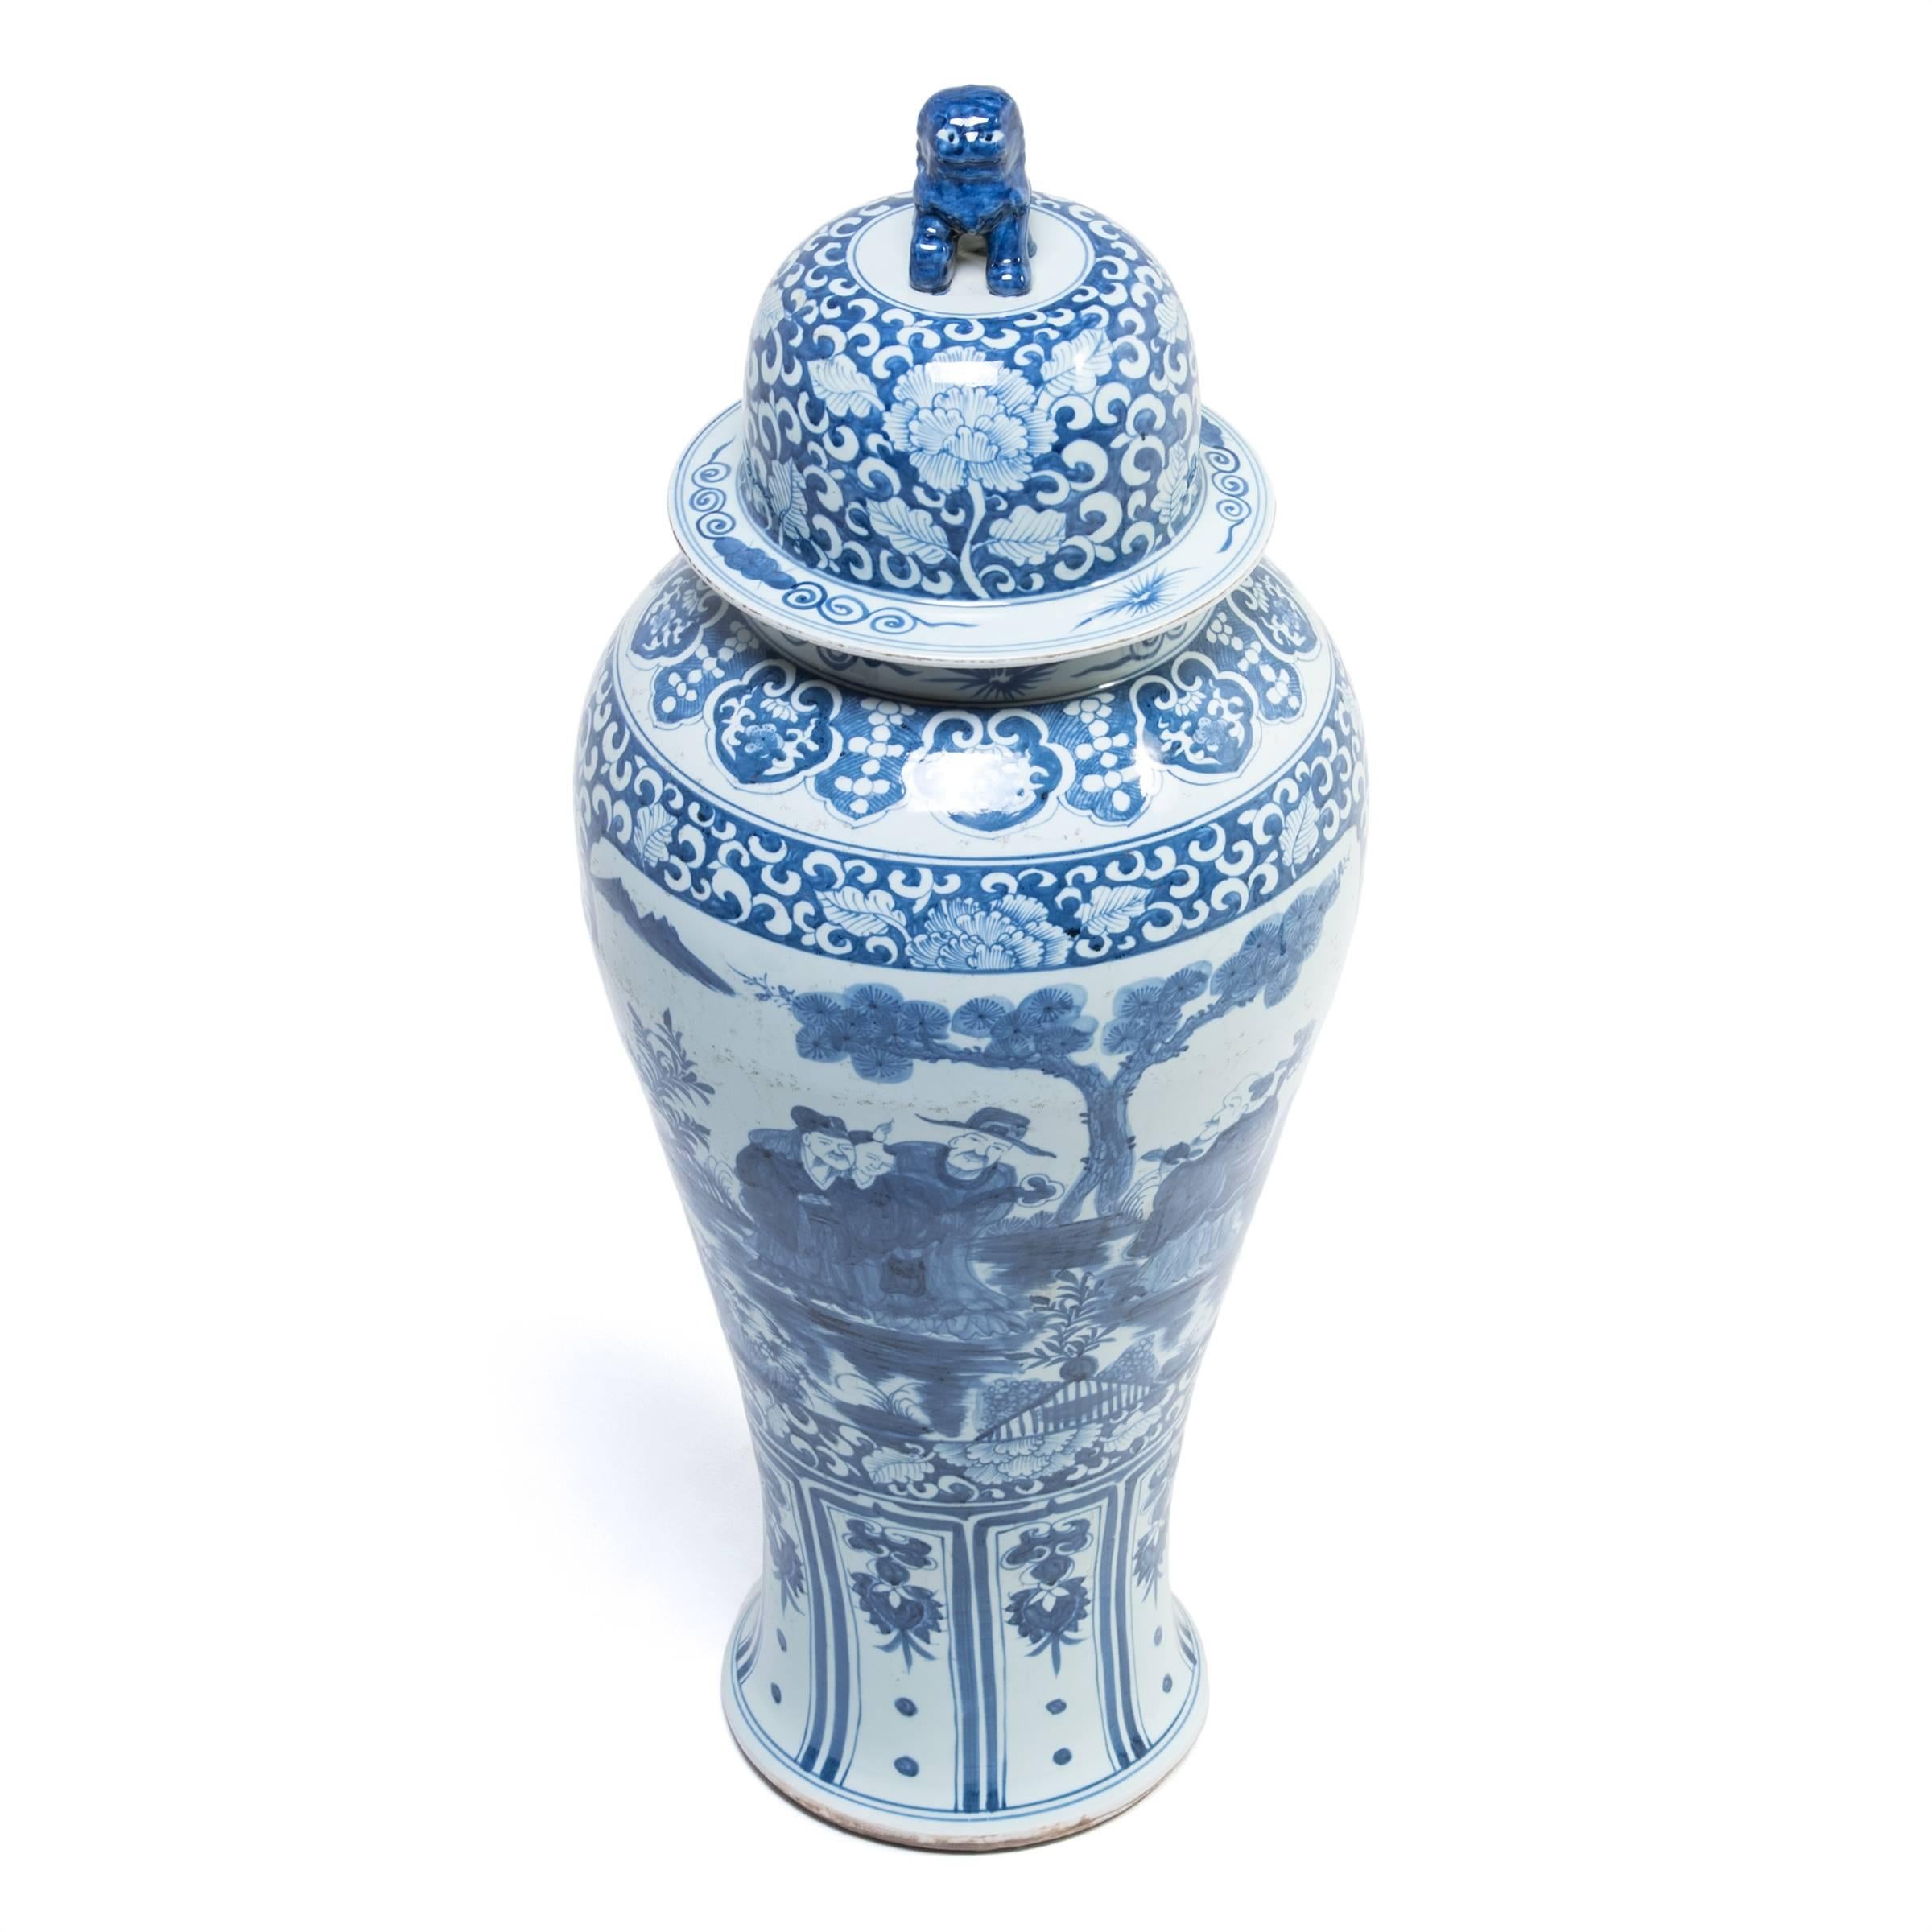 Glazed Blue and White Ginger Jar with Shizi and Landscape Portraits